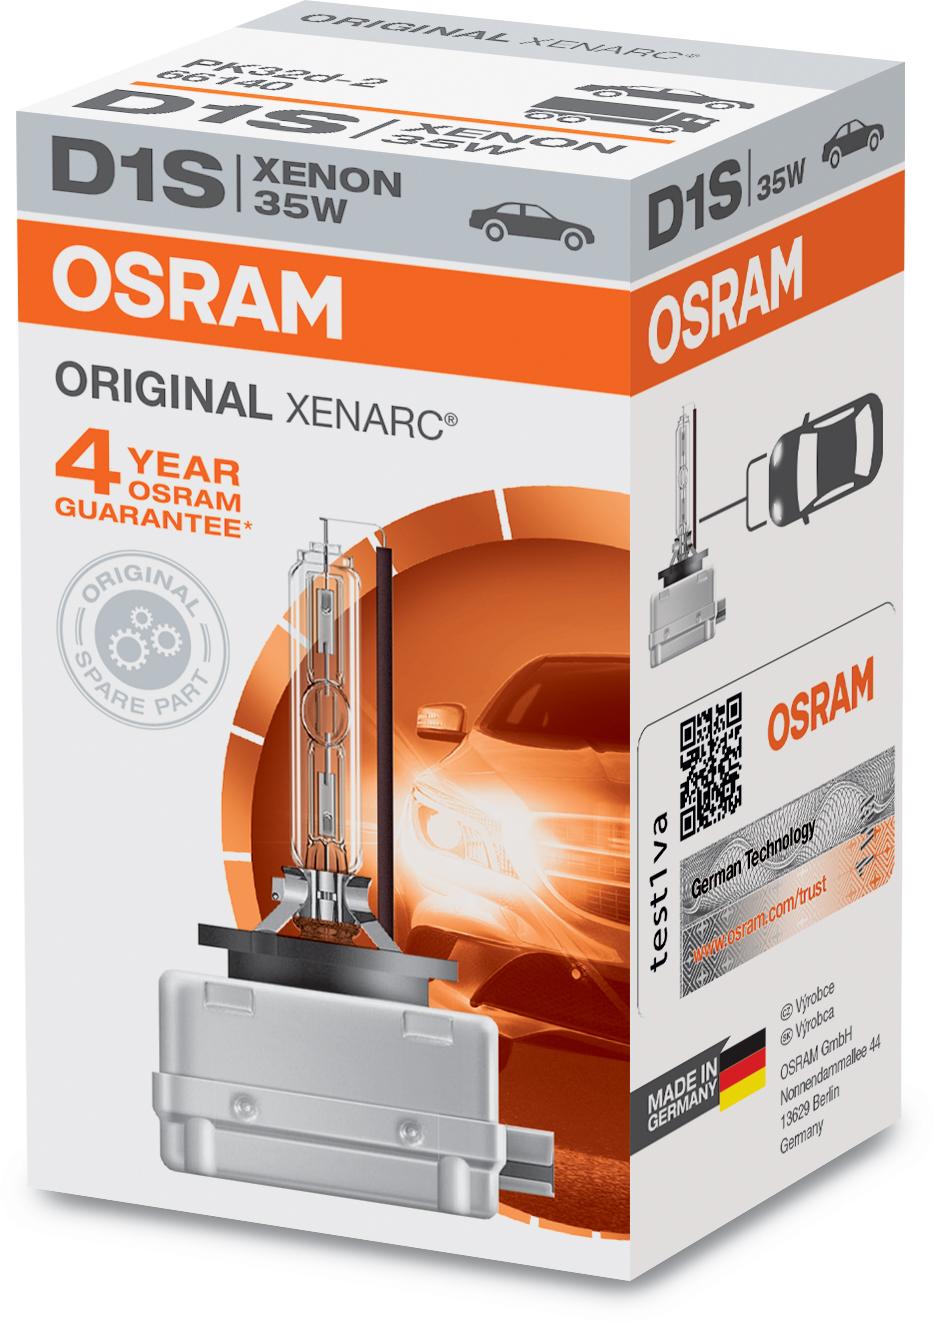 Osram D1S Xenarc Original Xenon Hid Single Pack